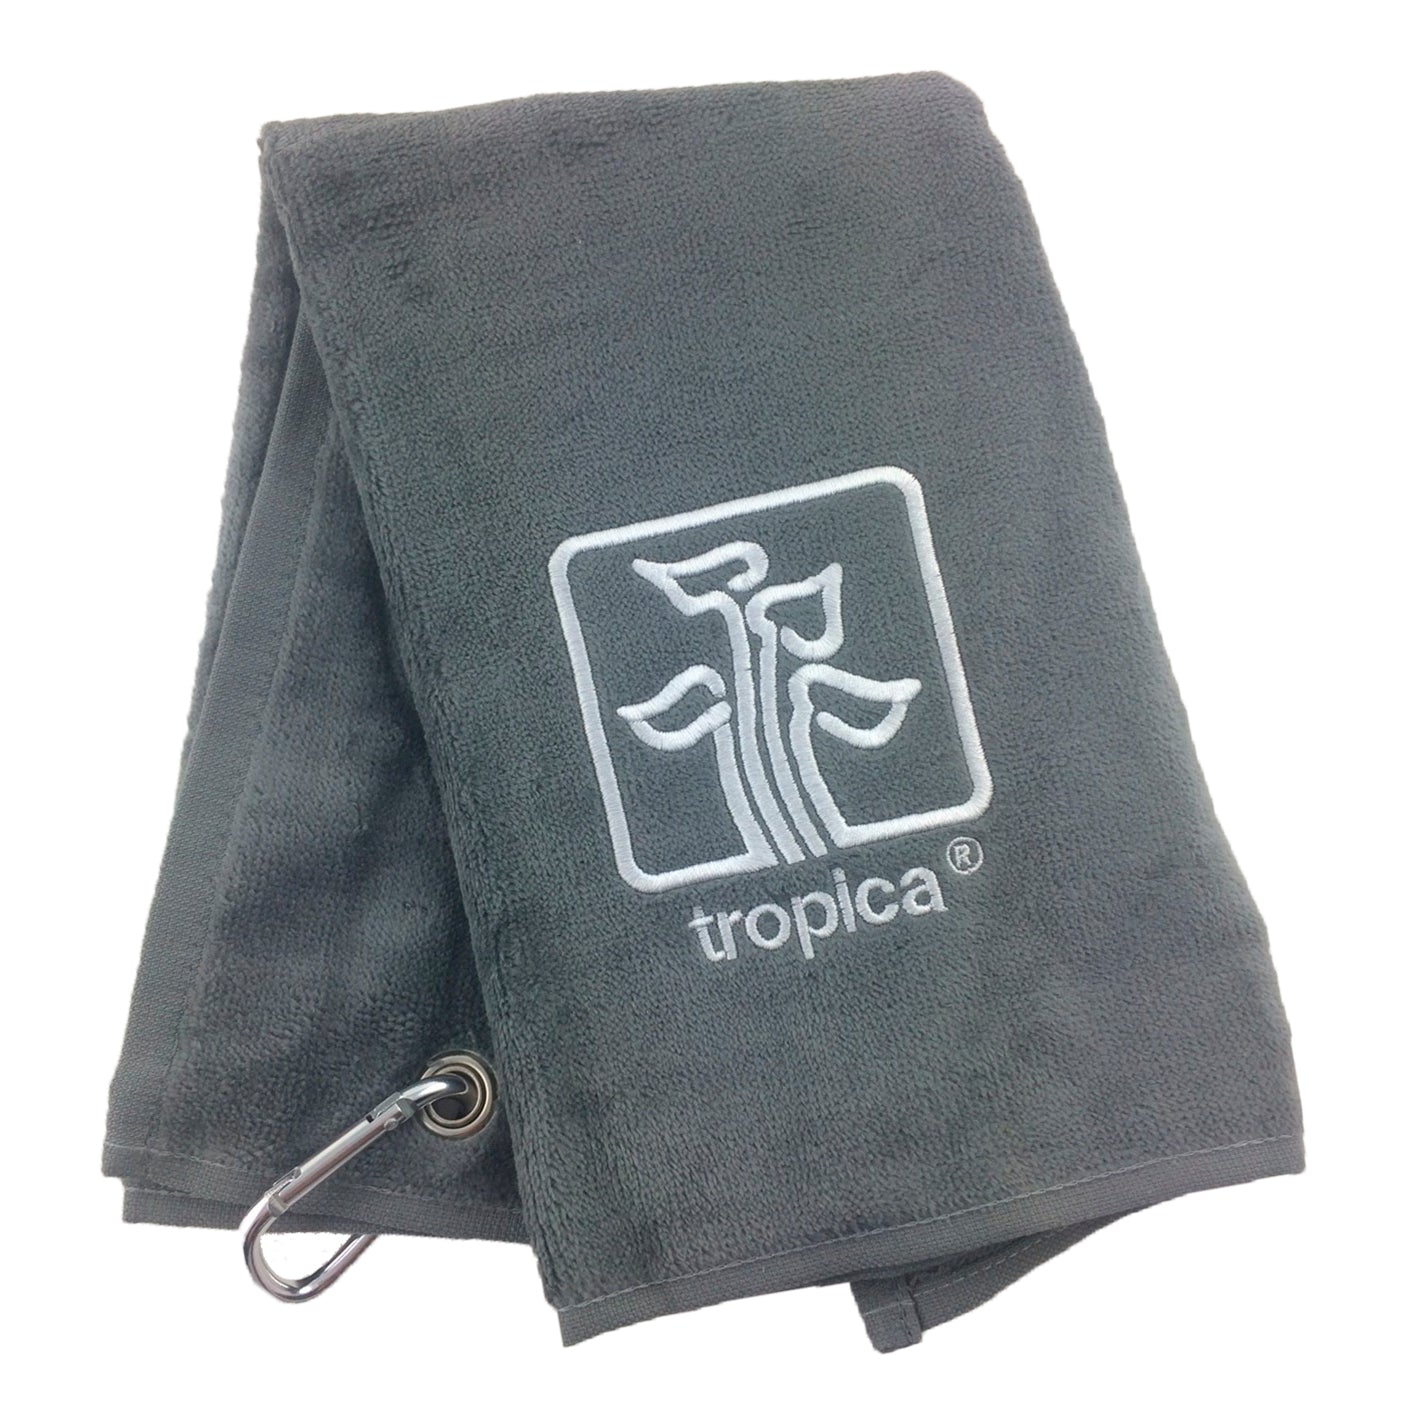 Tropica Handtuch